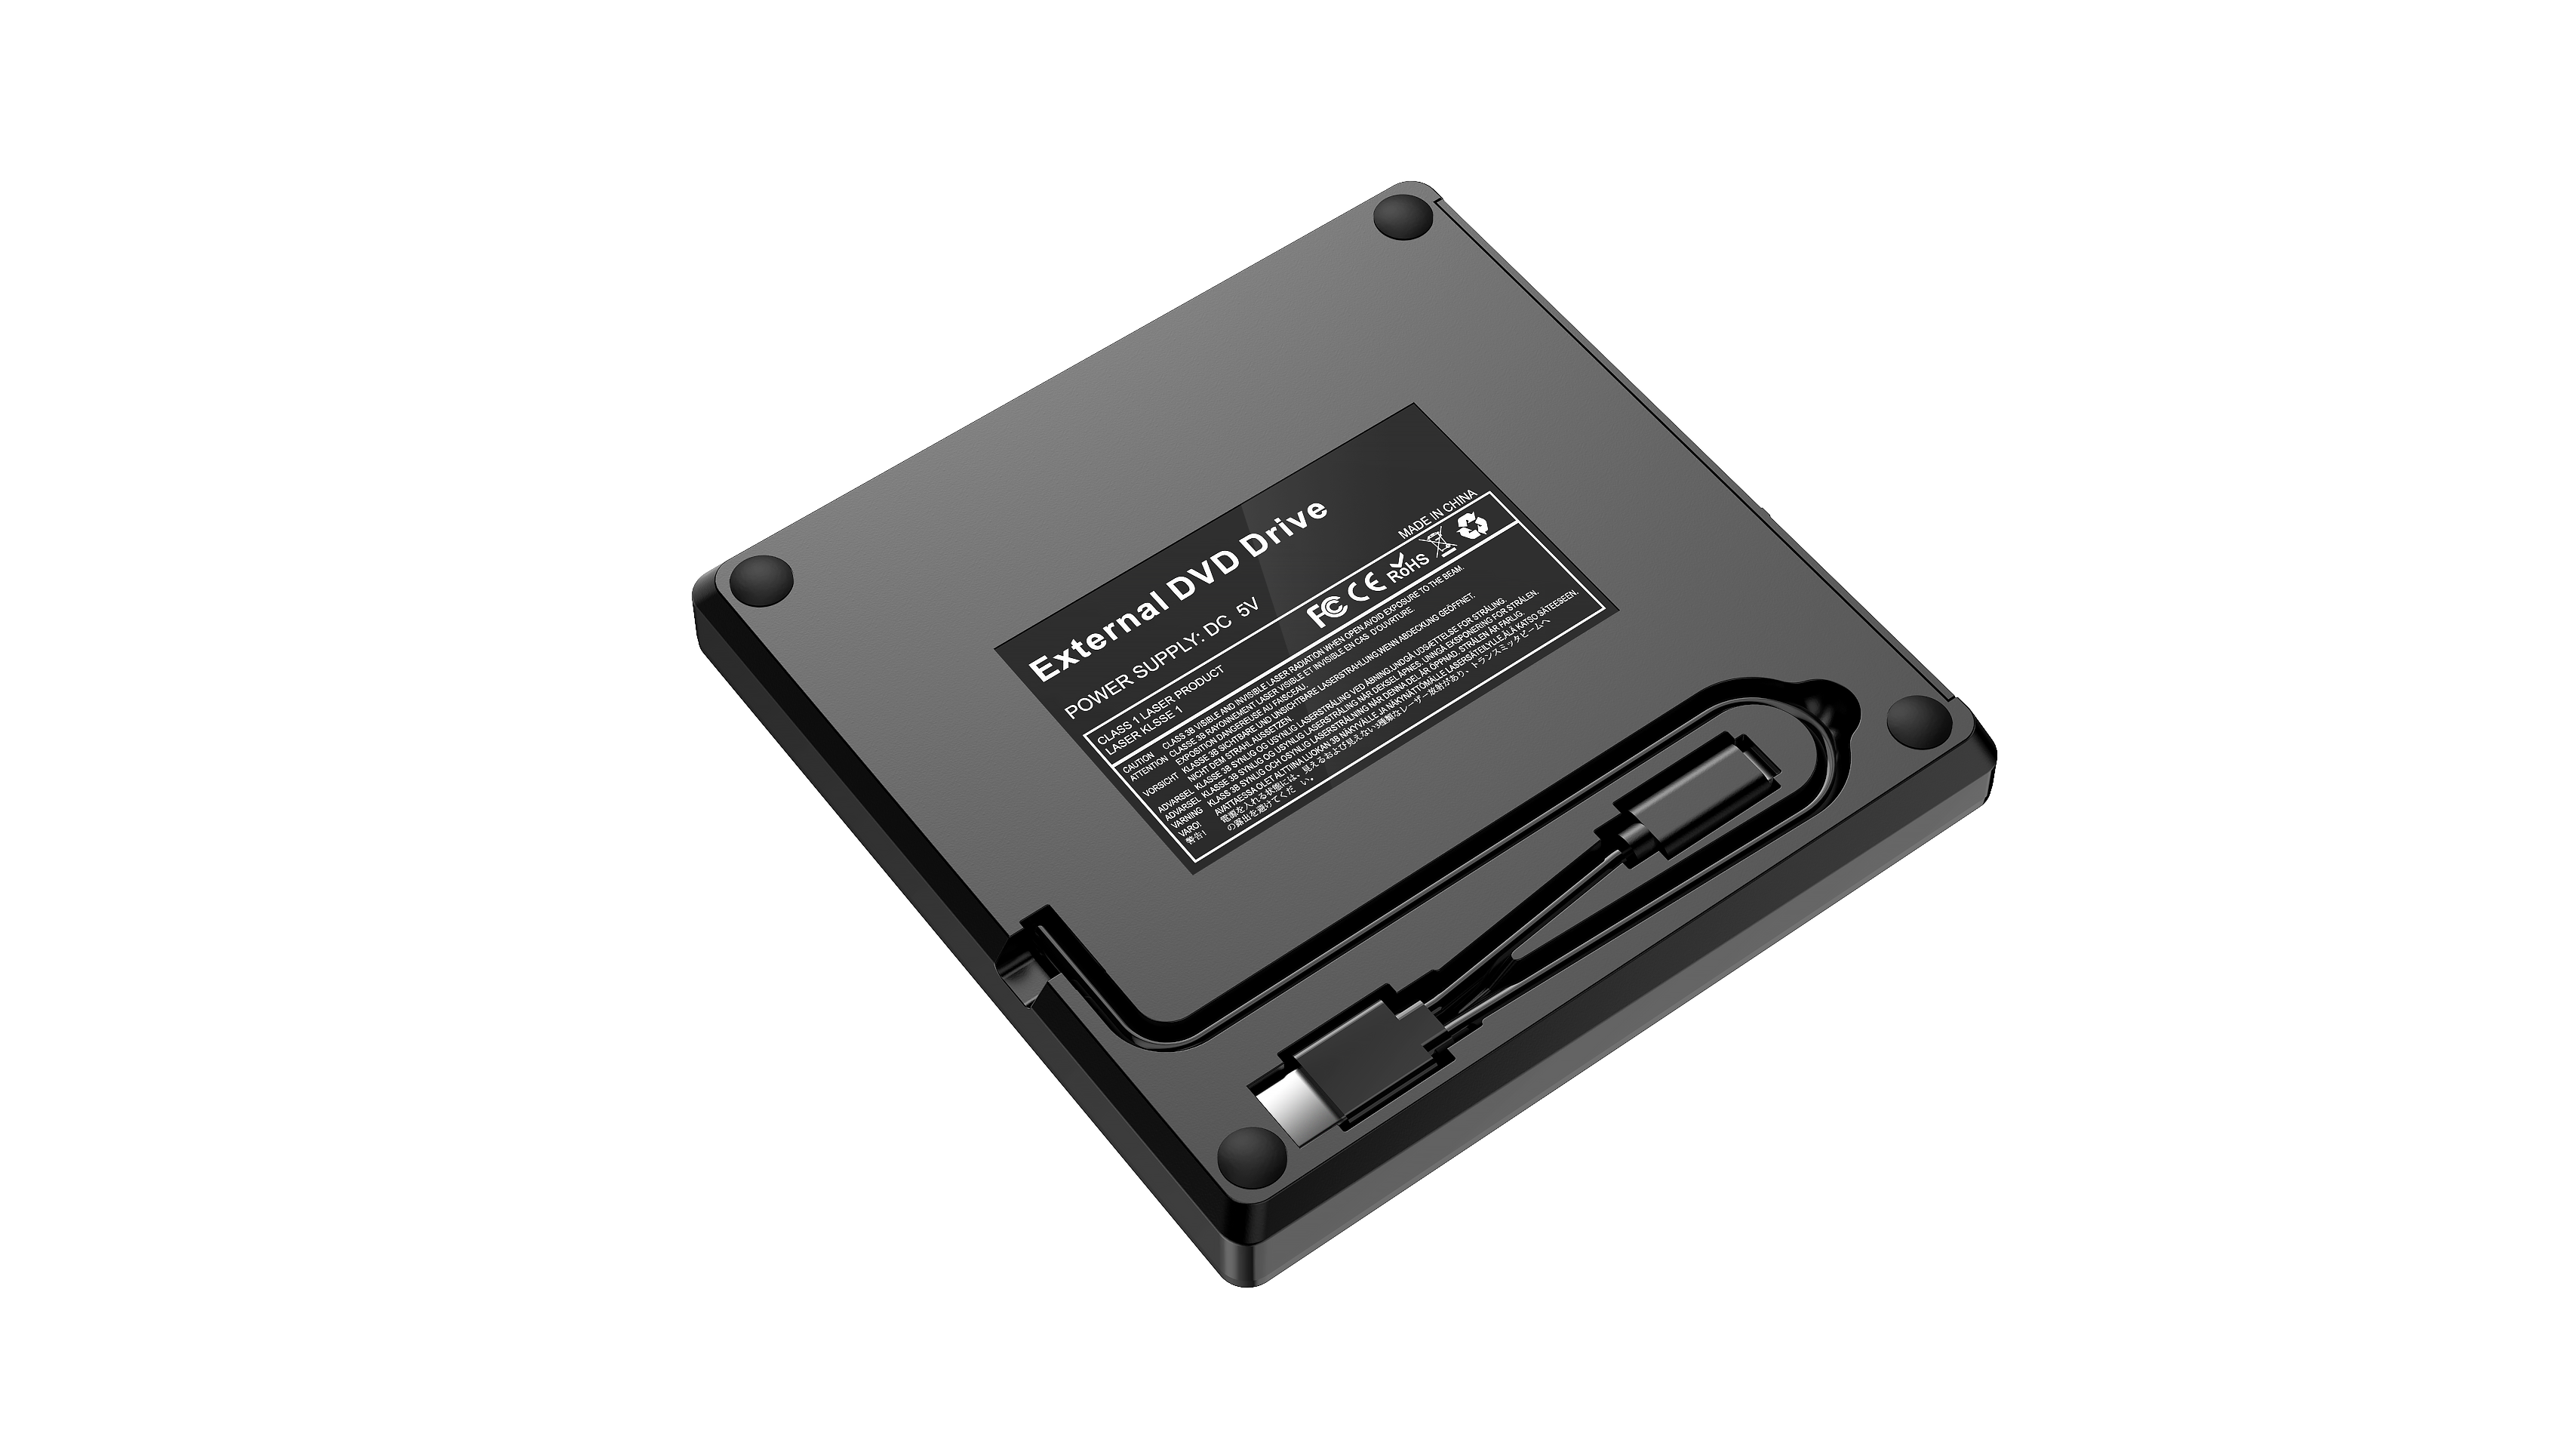 Tpye-C-USB-30-Combo-External-Optical-Drive-DVD-Player-Burner-for-PCNotebook-In-HomeOutdoorWork-Rhomb-1750093